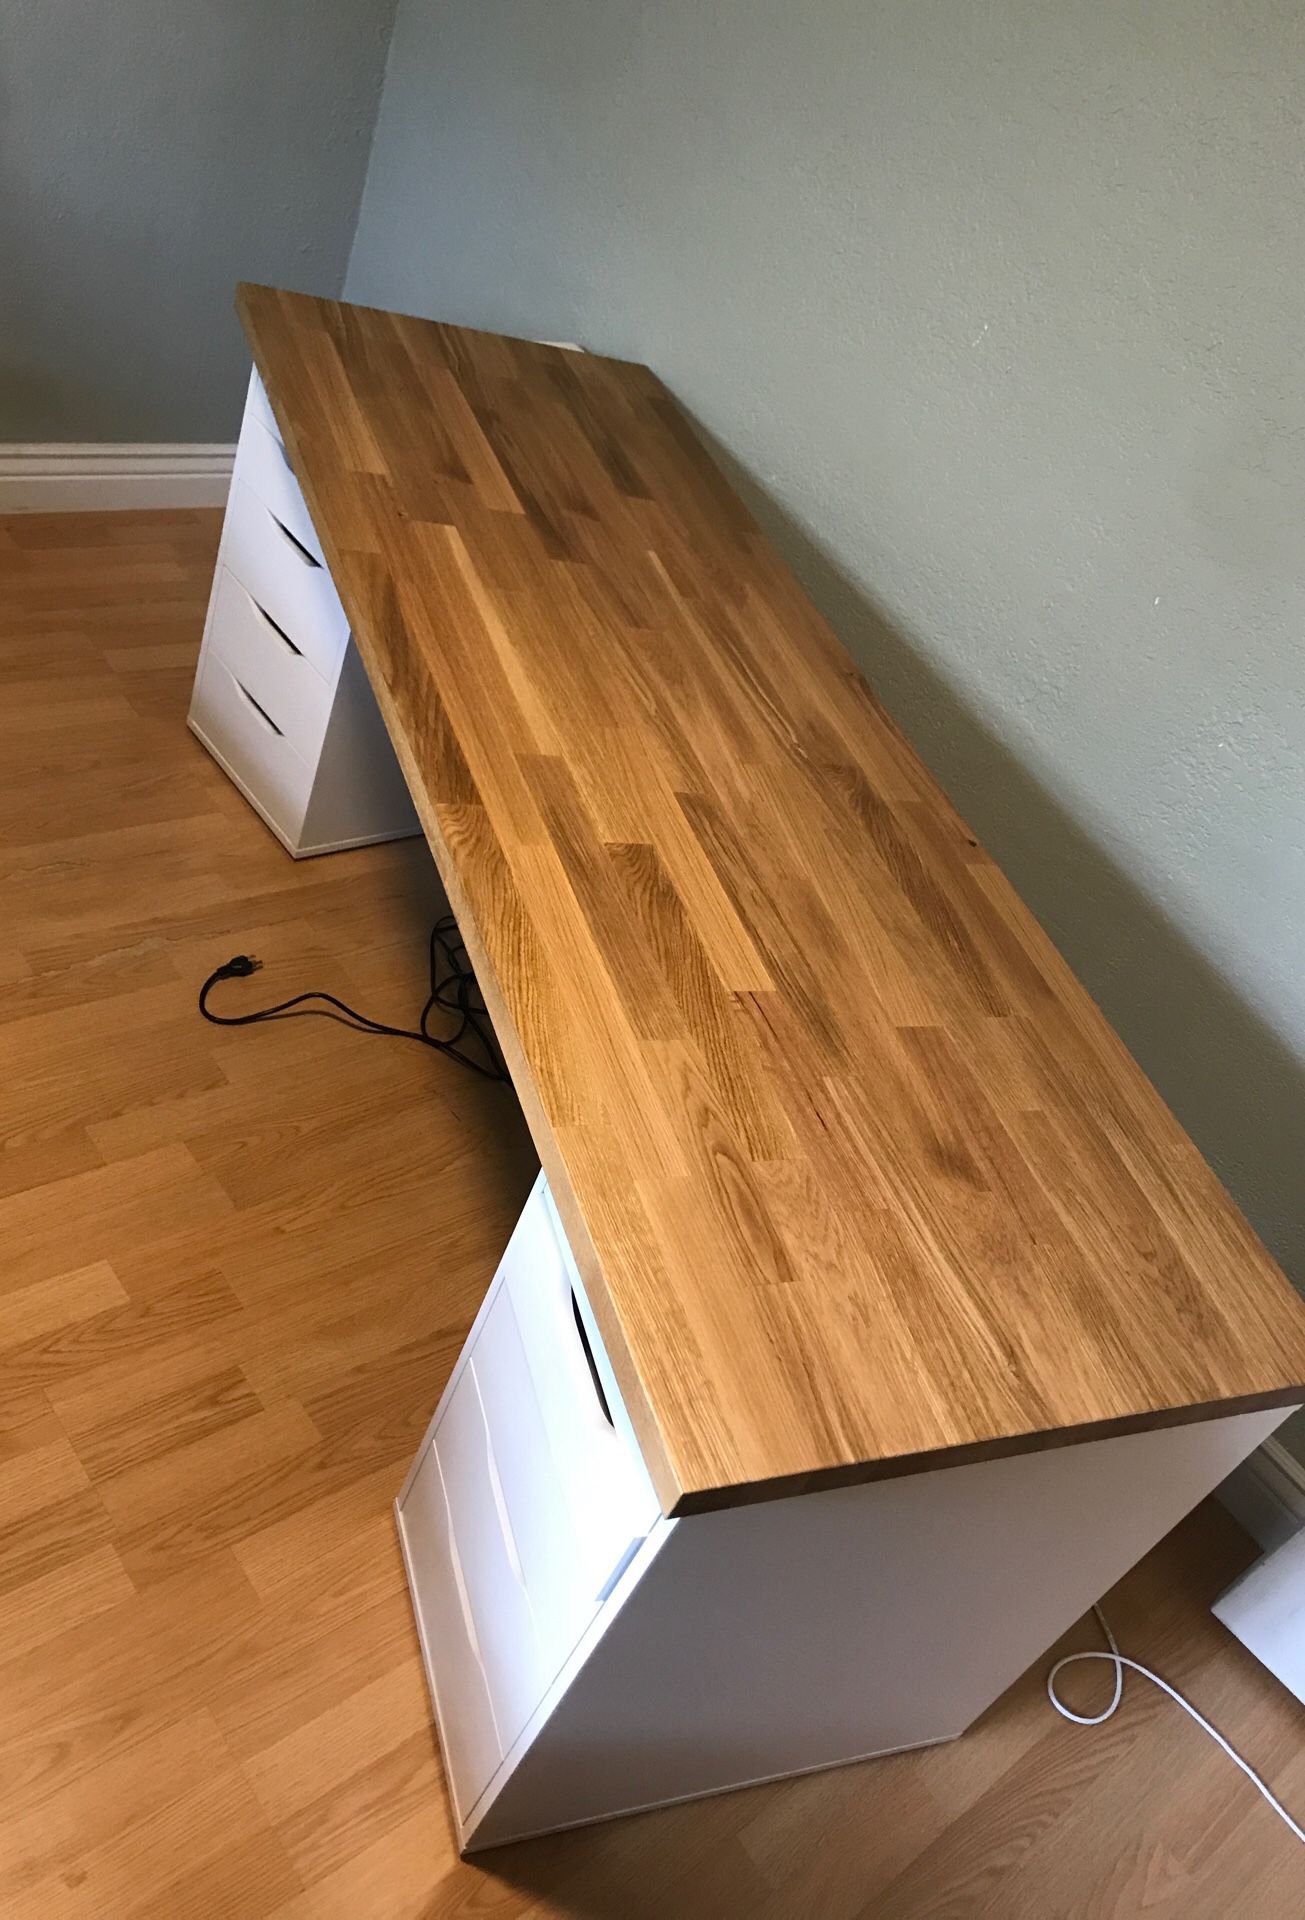 74” x 1 1/2” x 25” IKEA Desk / Kitchen Counter Top